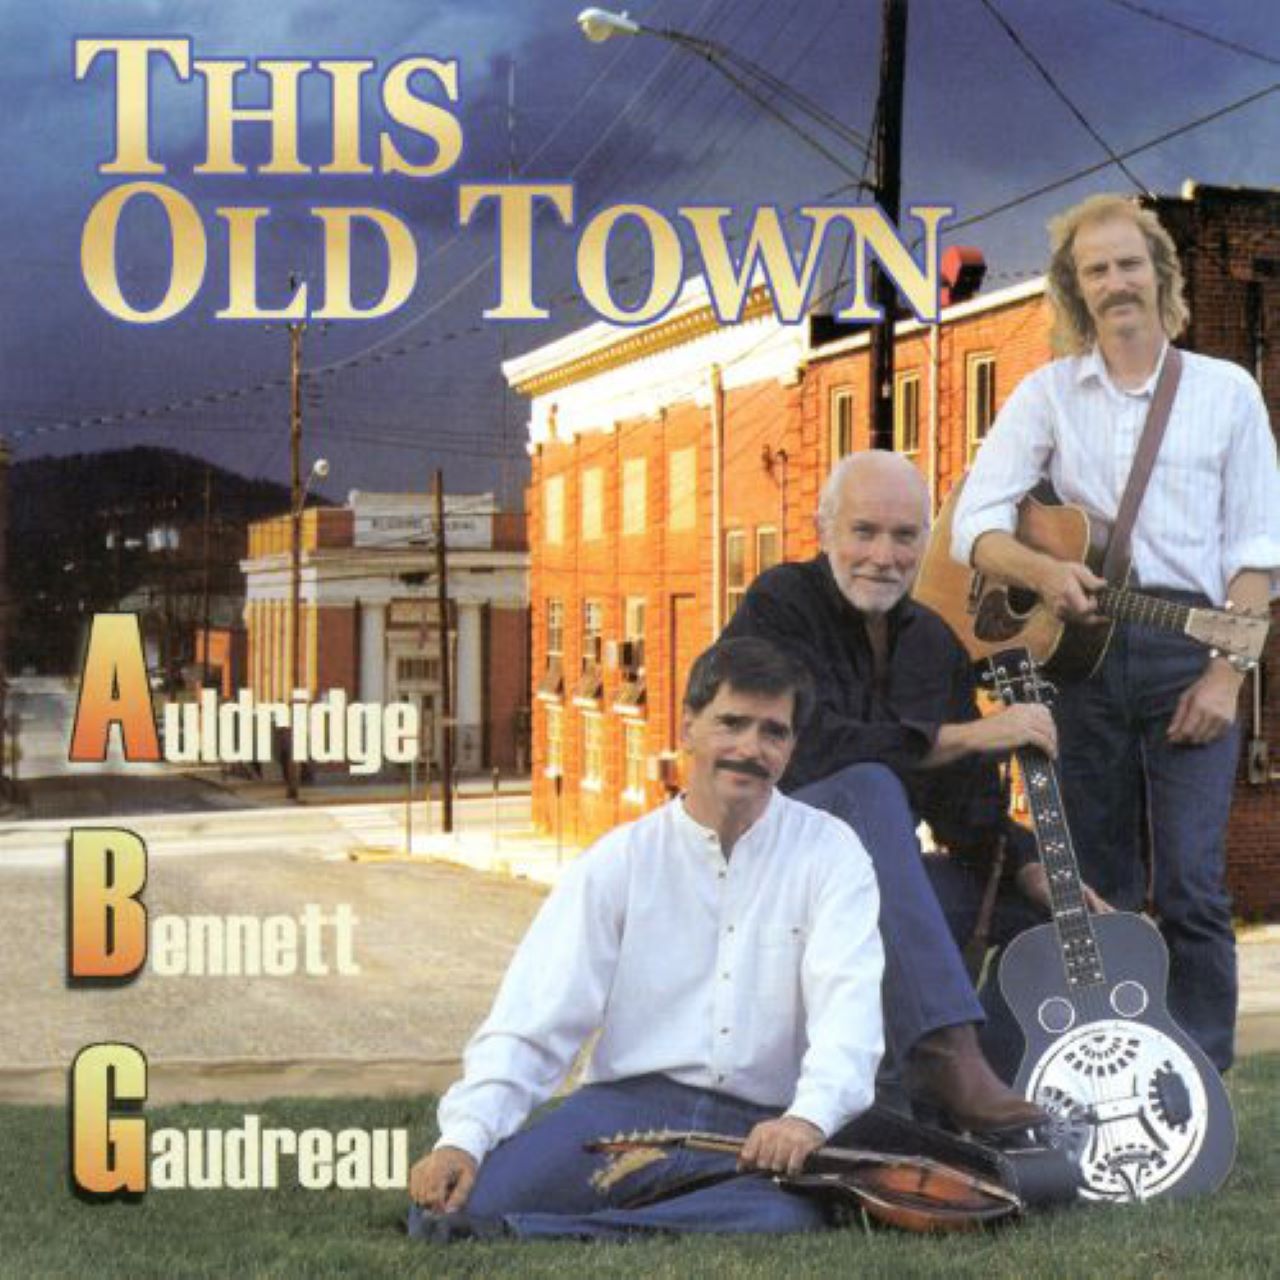 Auldridge, Bennet, Gaudreau - This Old Town cover album